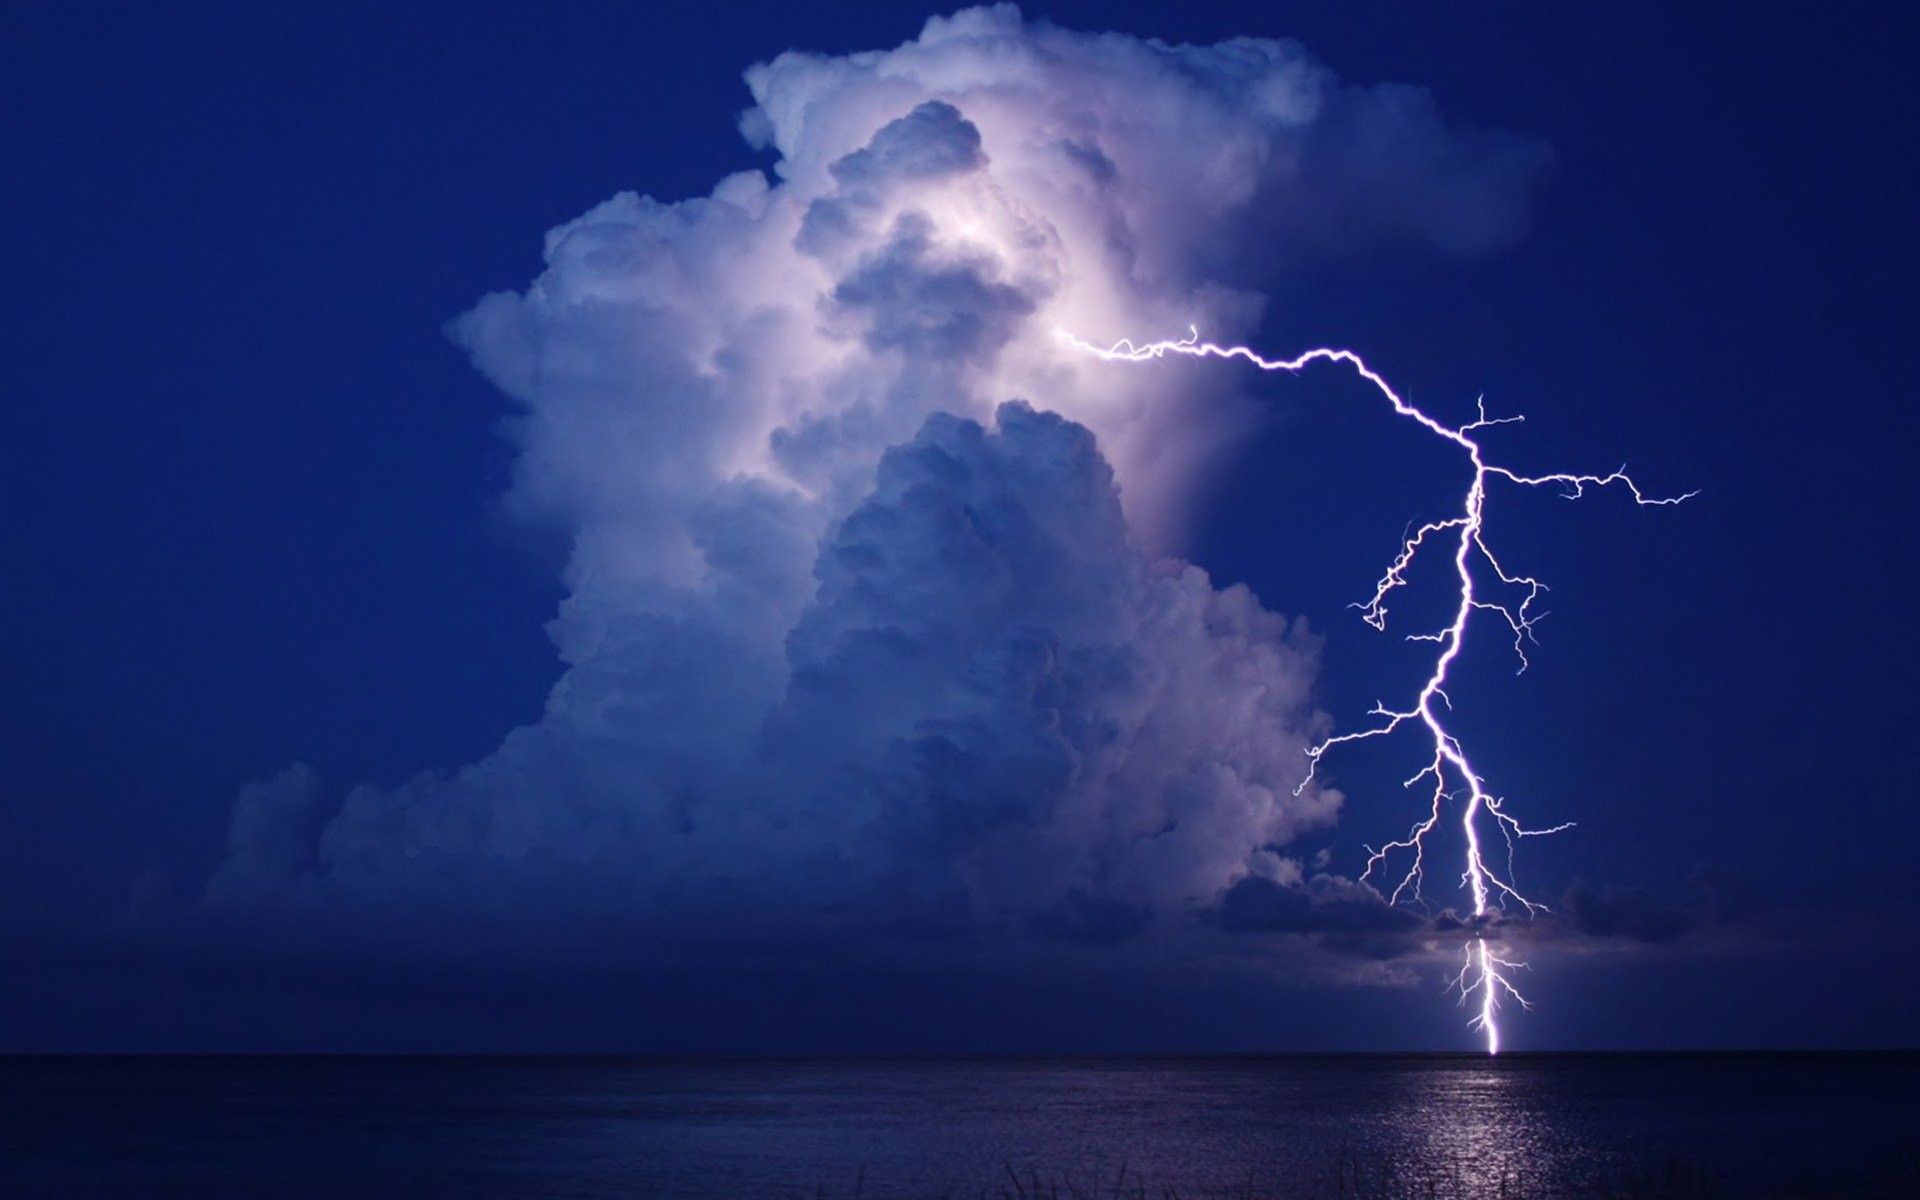 A lightning bolt strikes the sky over water - Lightning